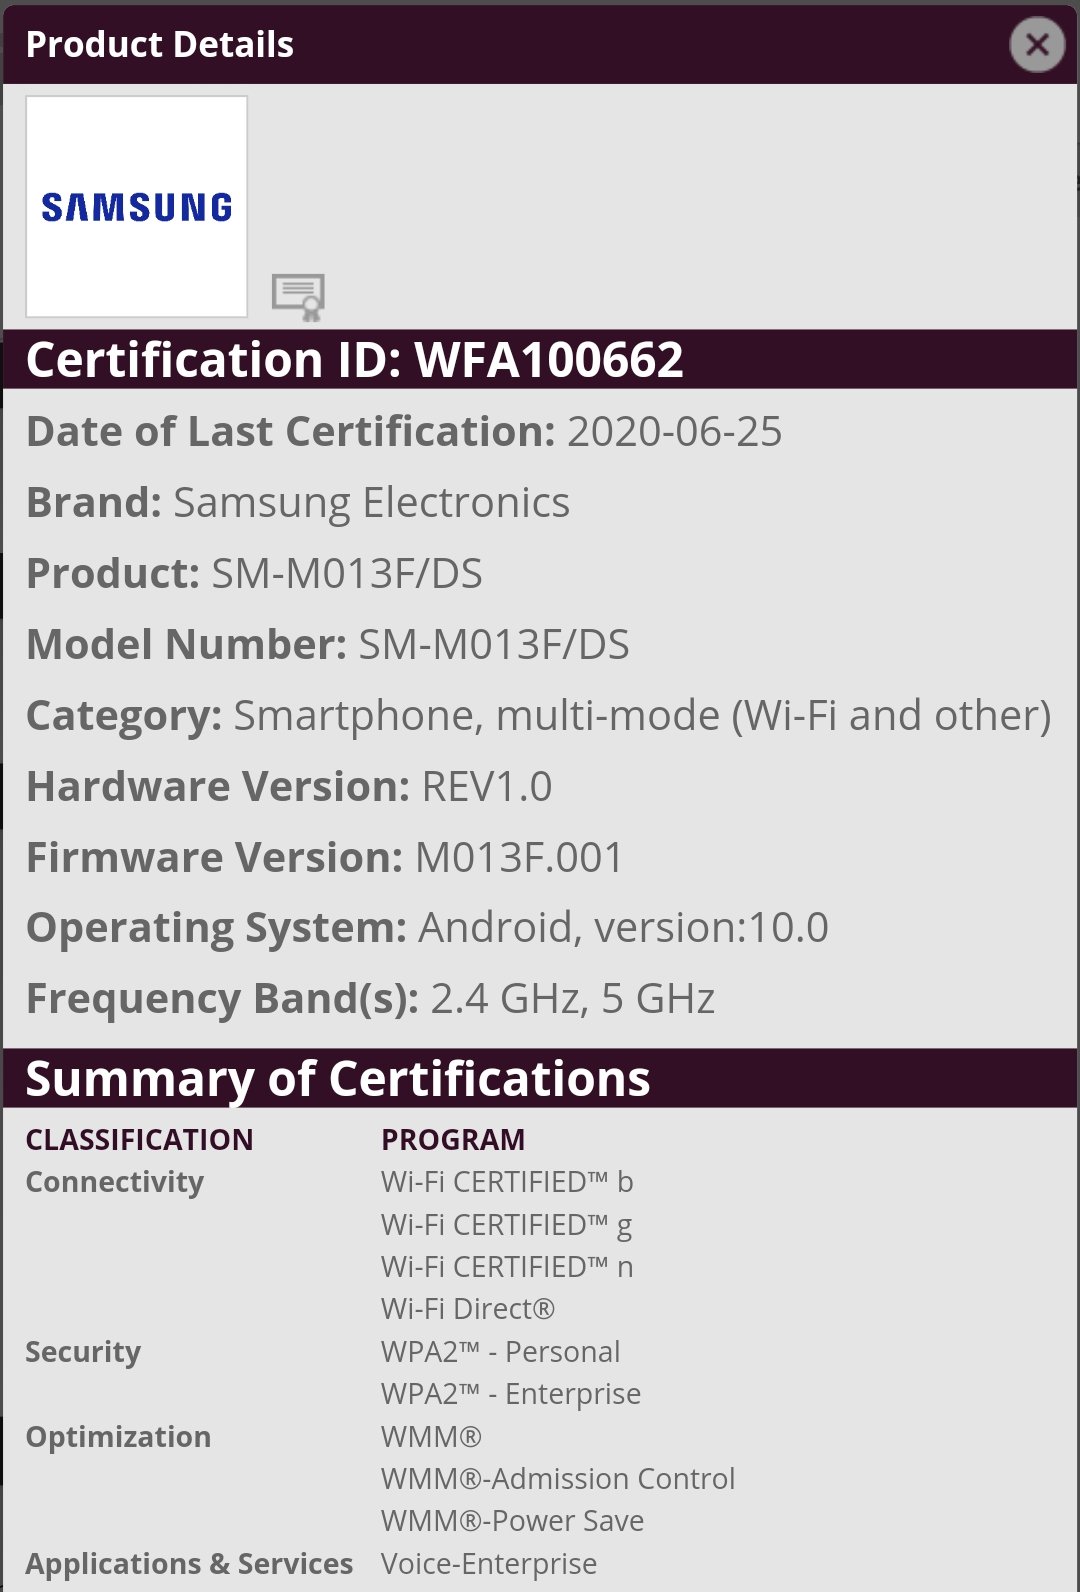 Galaxy M01 Core (SM-M013F/DS) bags Wi-Fi Alliance certification